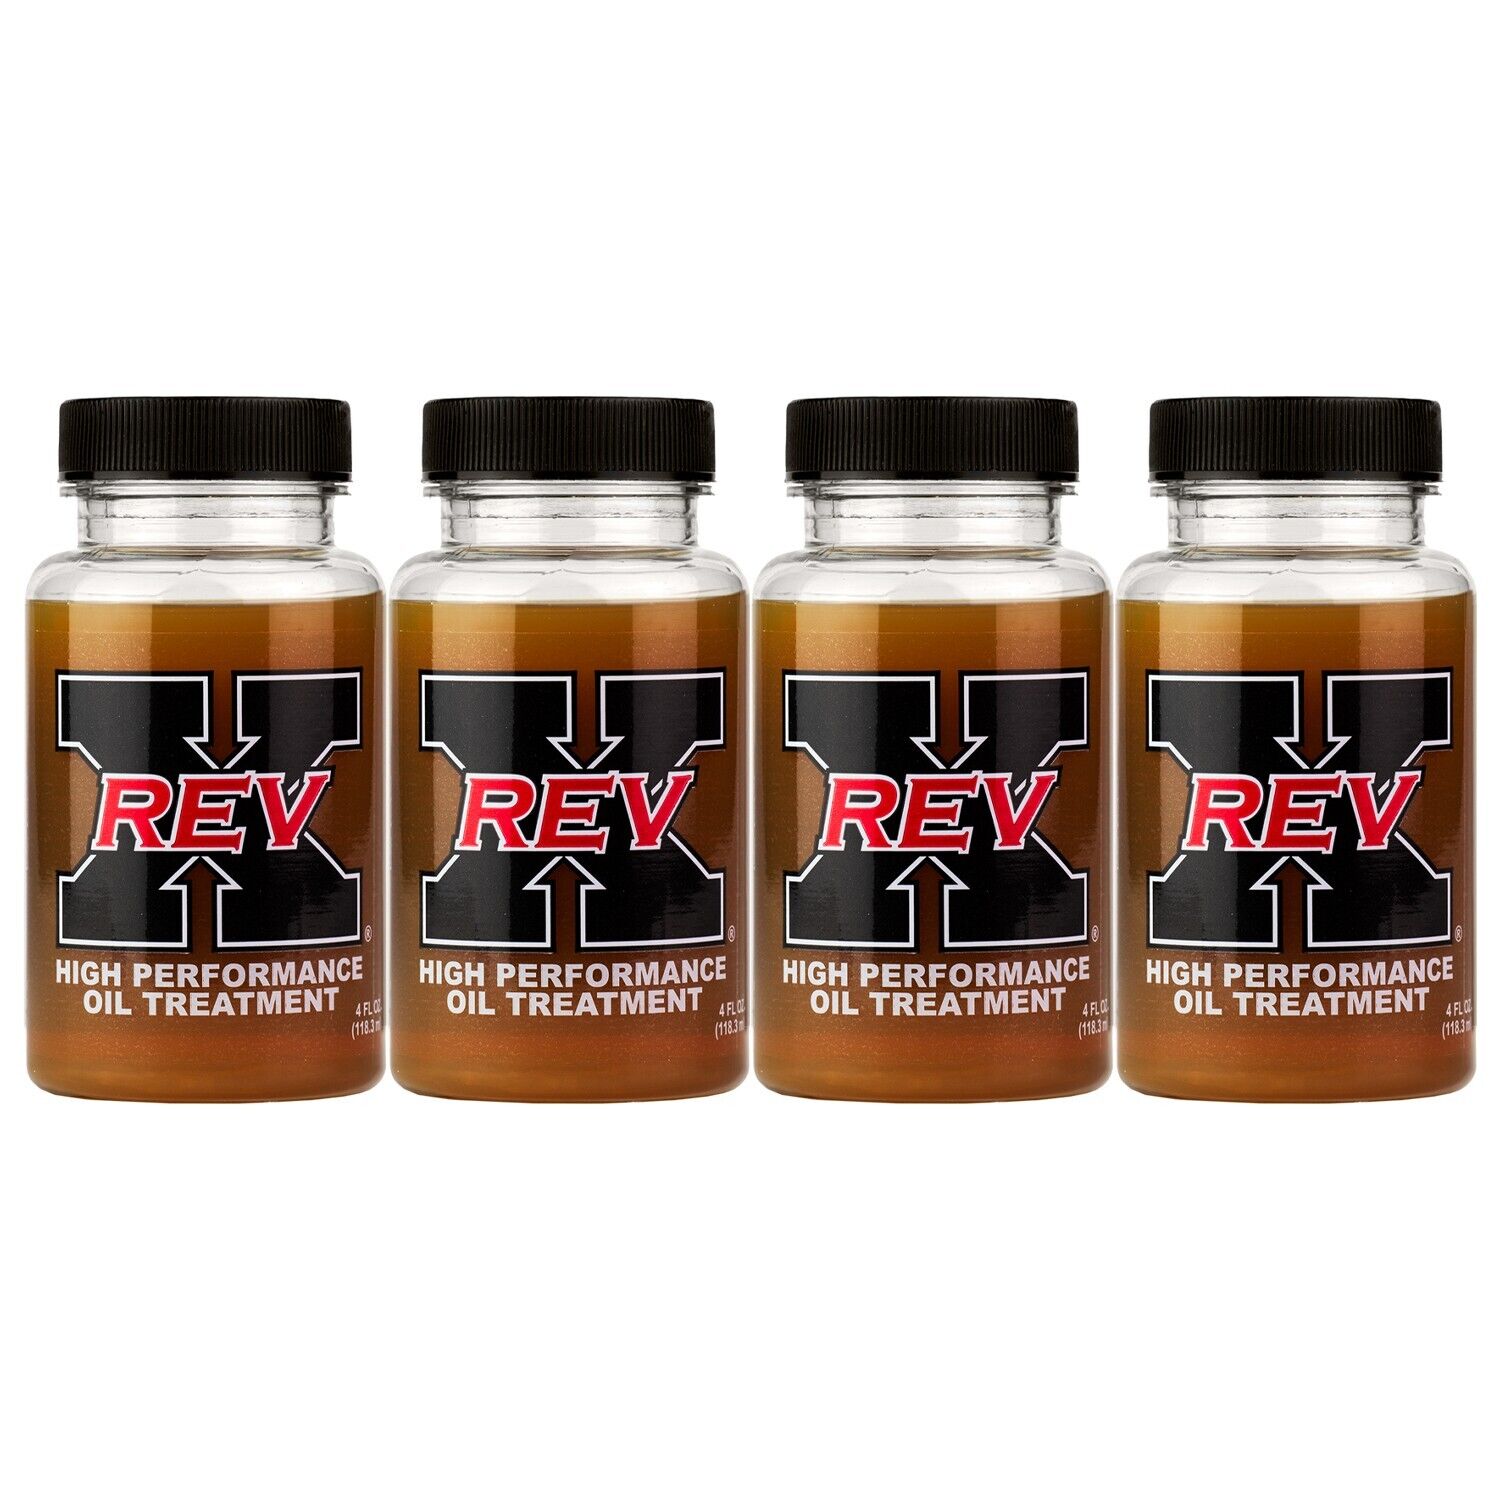 REV X High Performance Oil Treatment (4) - The Powerstroke Stiction Fix Additive